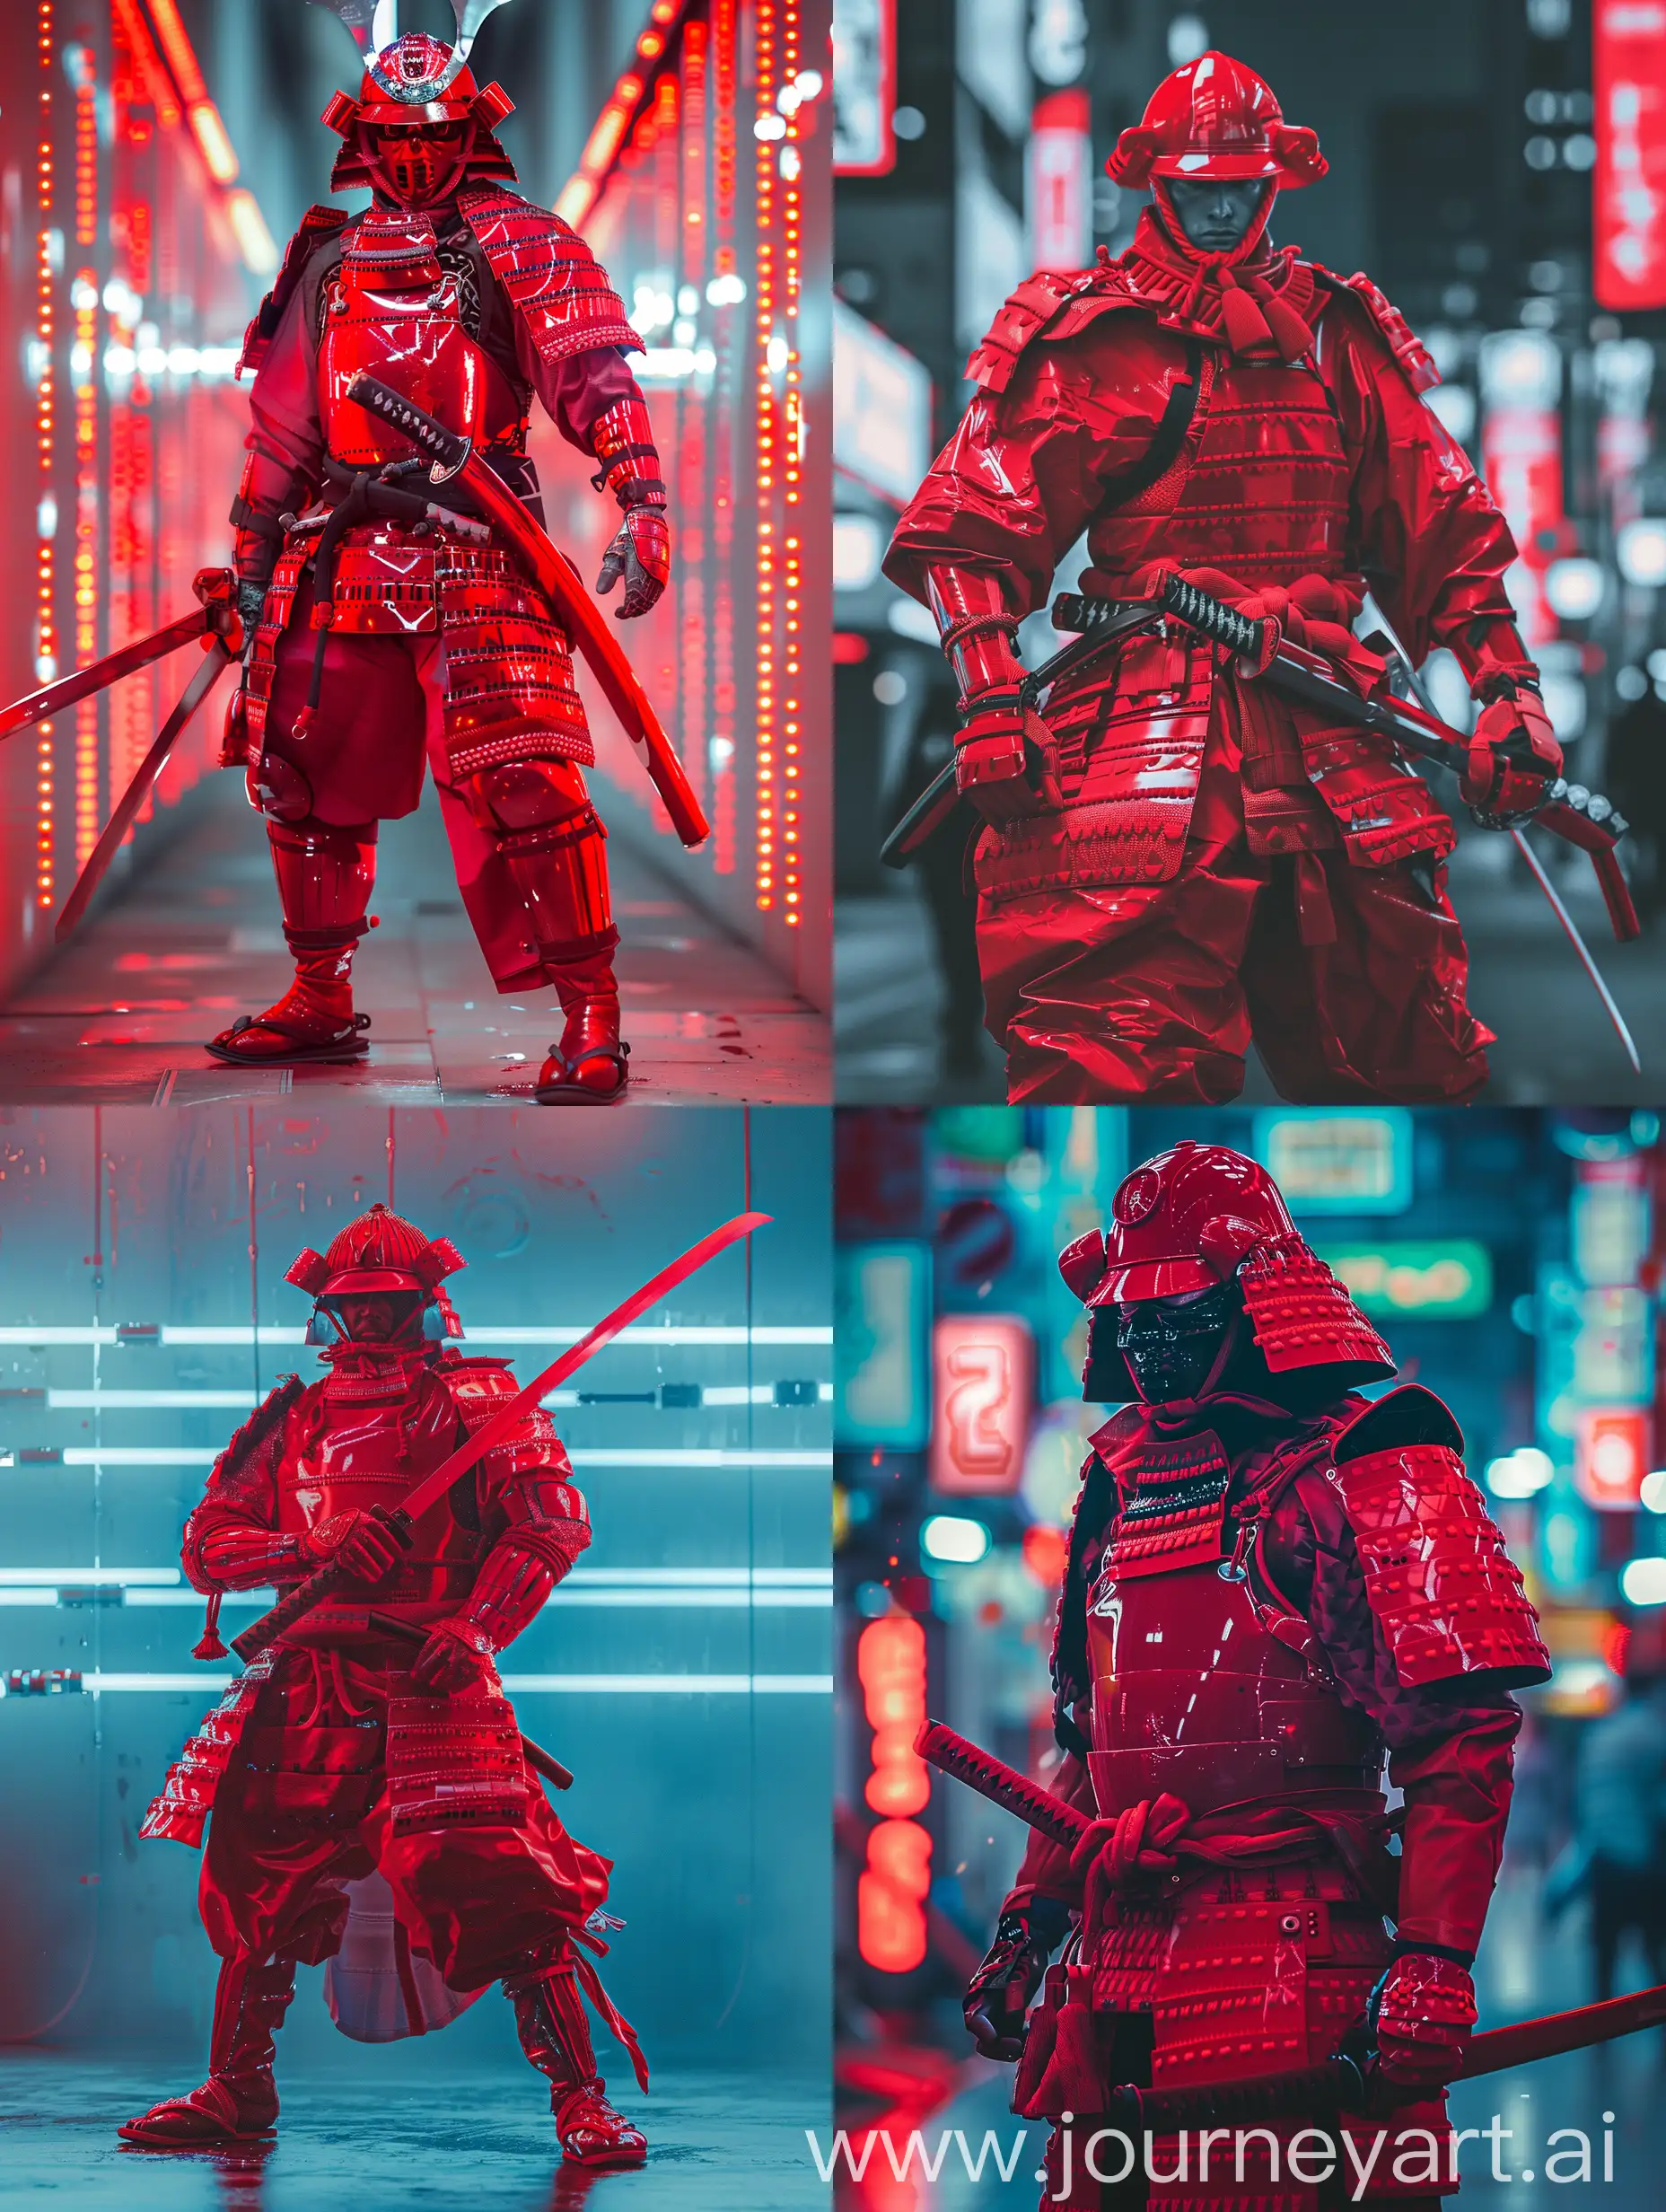 Urban-Samurai-in-Red-Armor-Futuristic-Warrior-Amidst-Neon-Lights